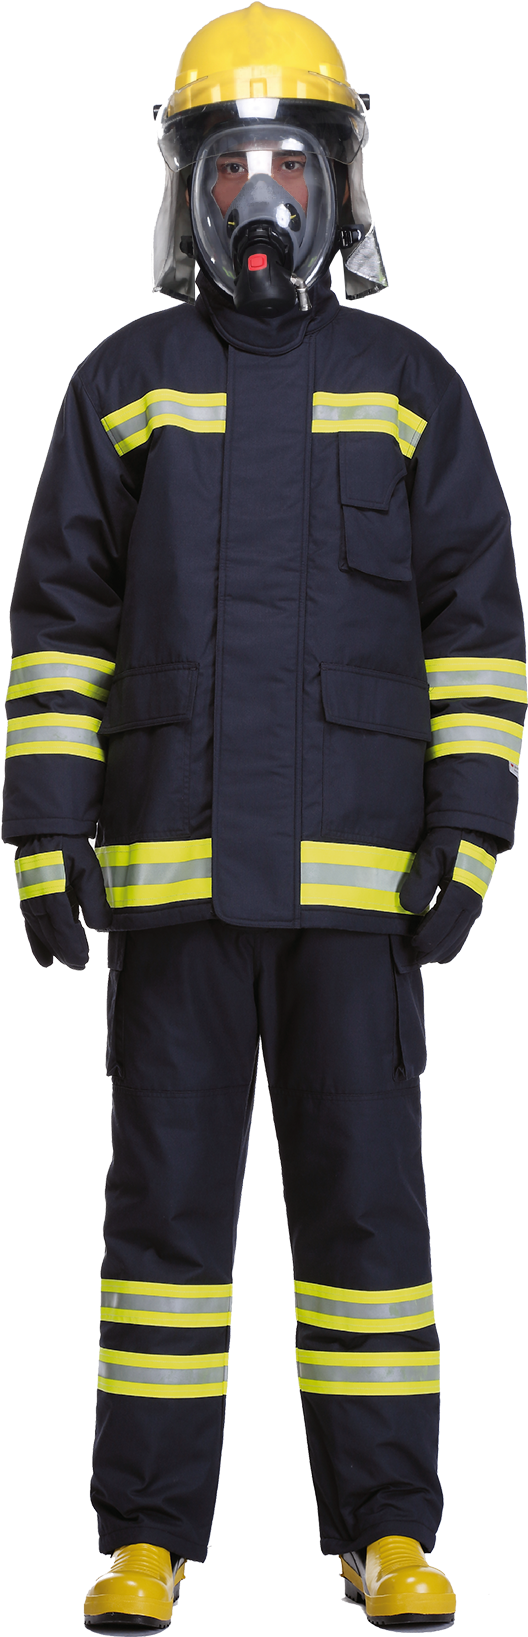 A Person Wearing A Firefighter Uniform